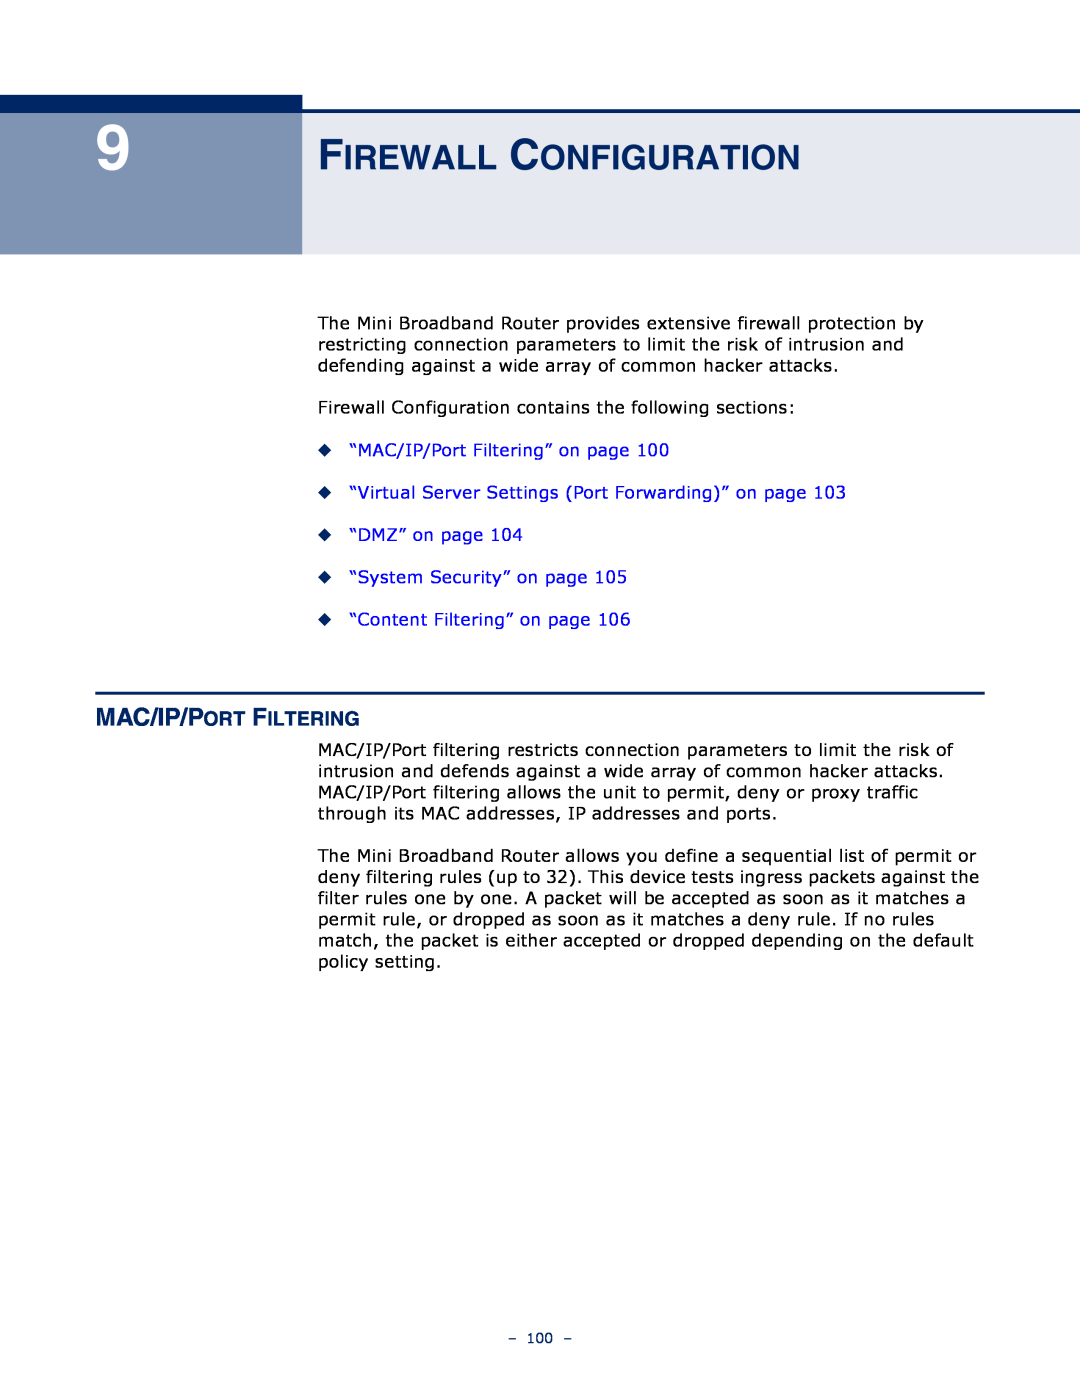 SMC Networks SMCWBR11S-N manual Firewall Configuration, Mac/Ip/Port Filtering, “MAC/IP/Port Filtering” on page 